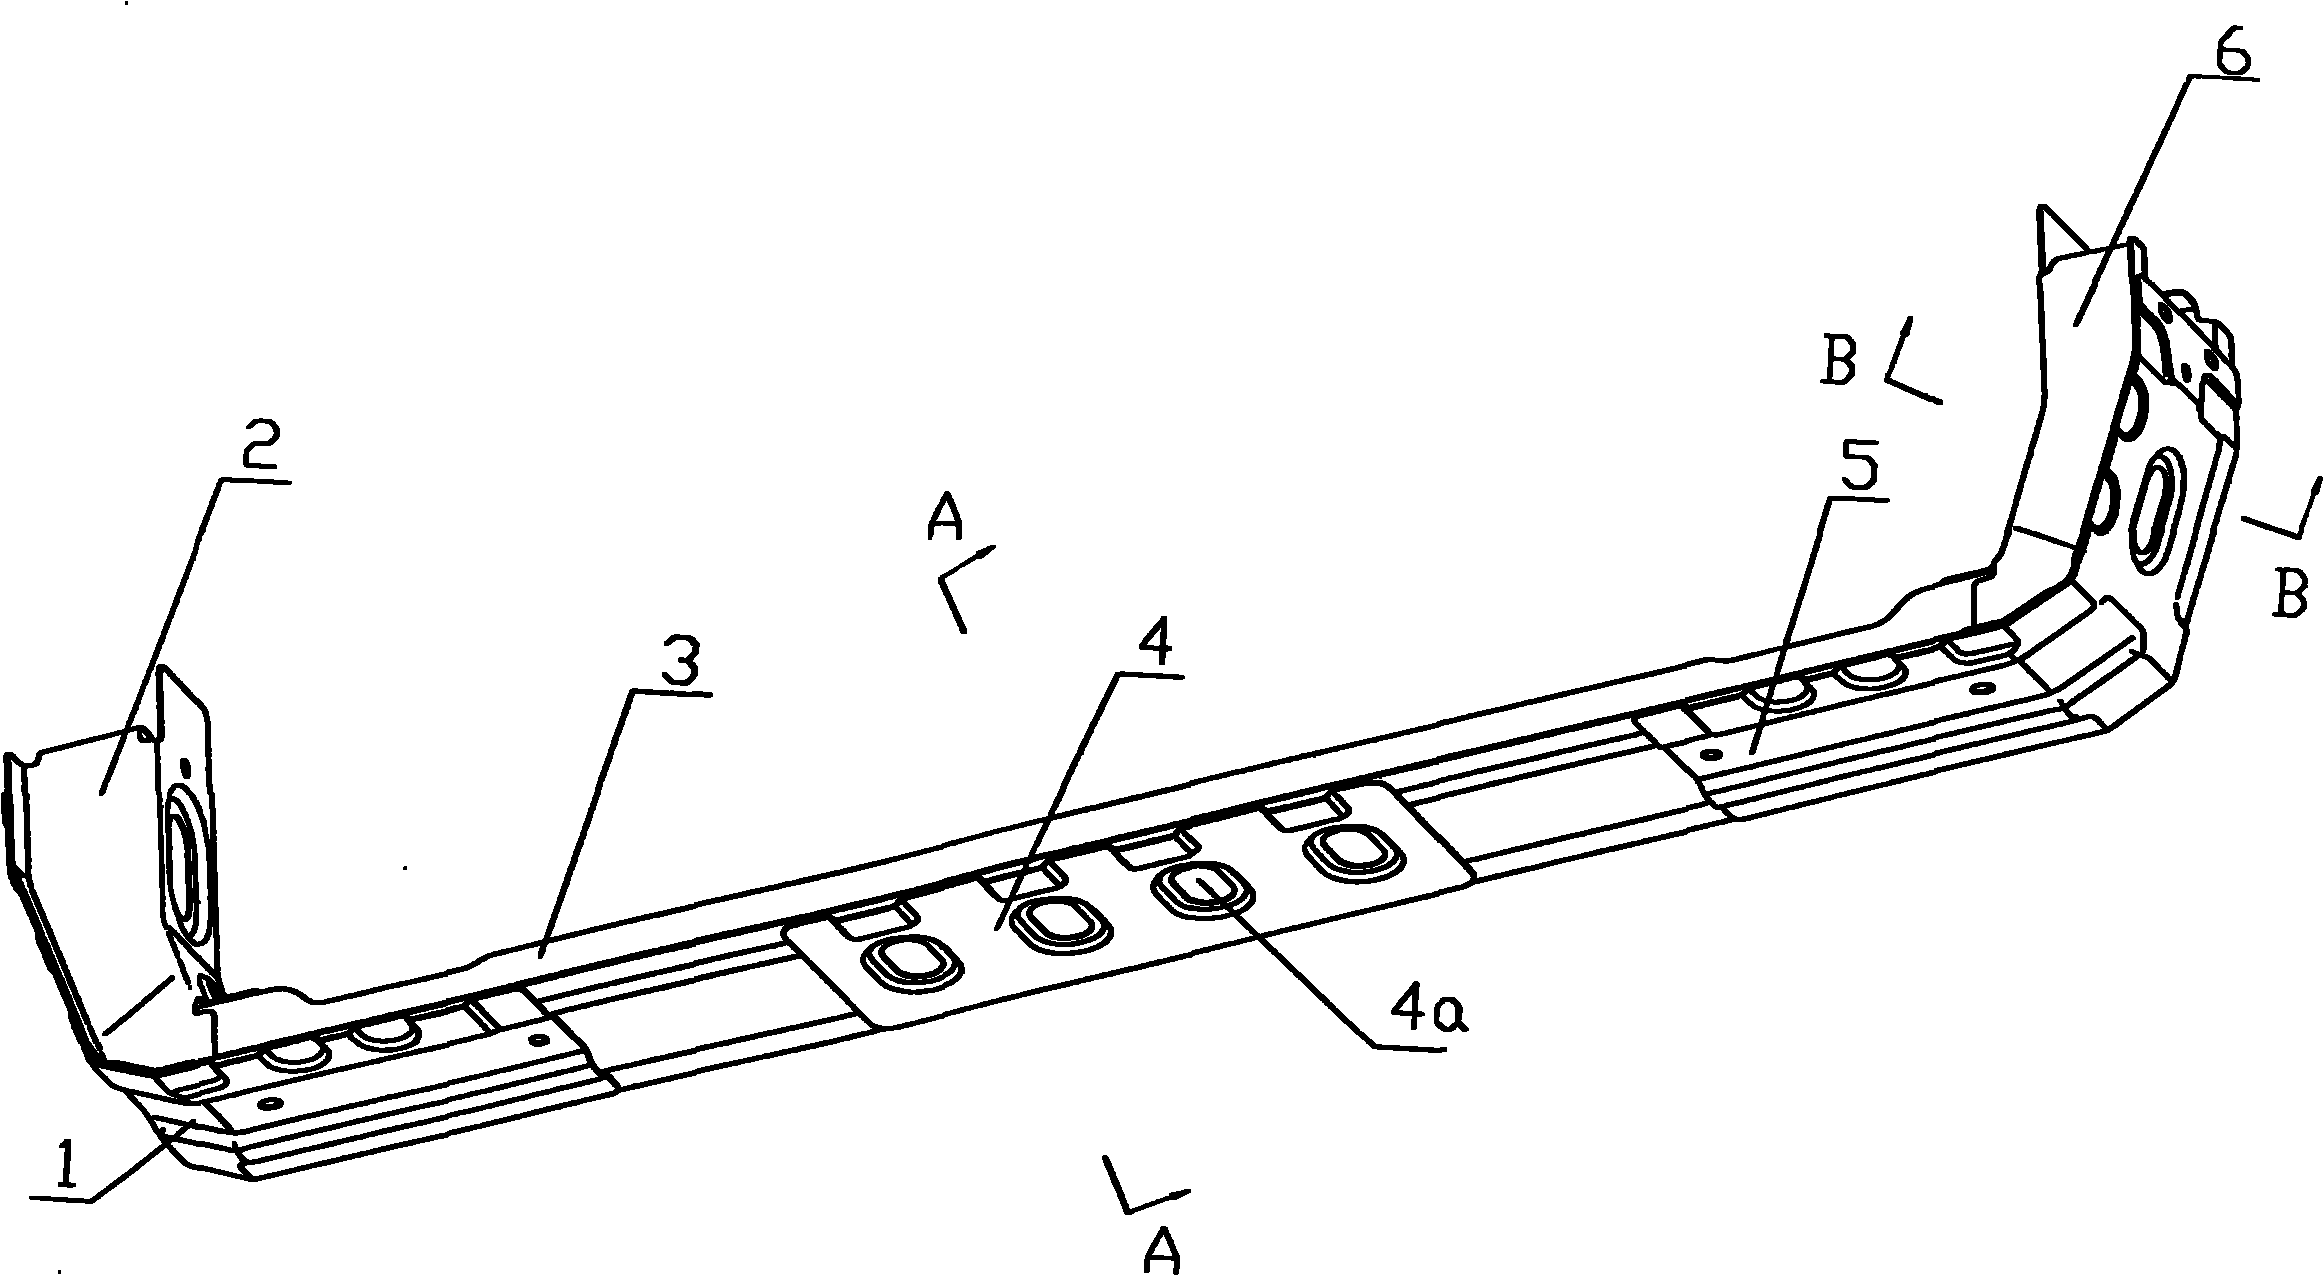 Lower bracket assembly of car radiator